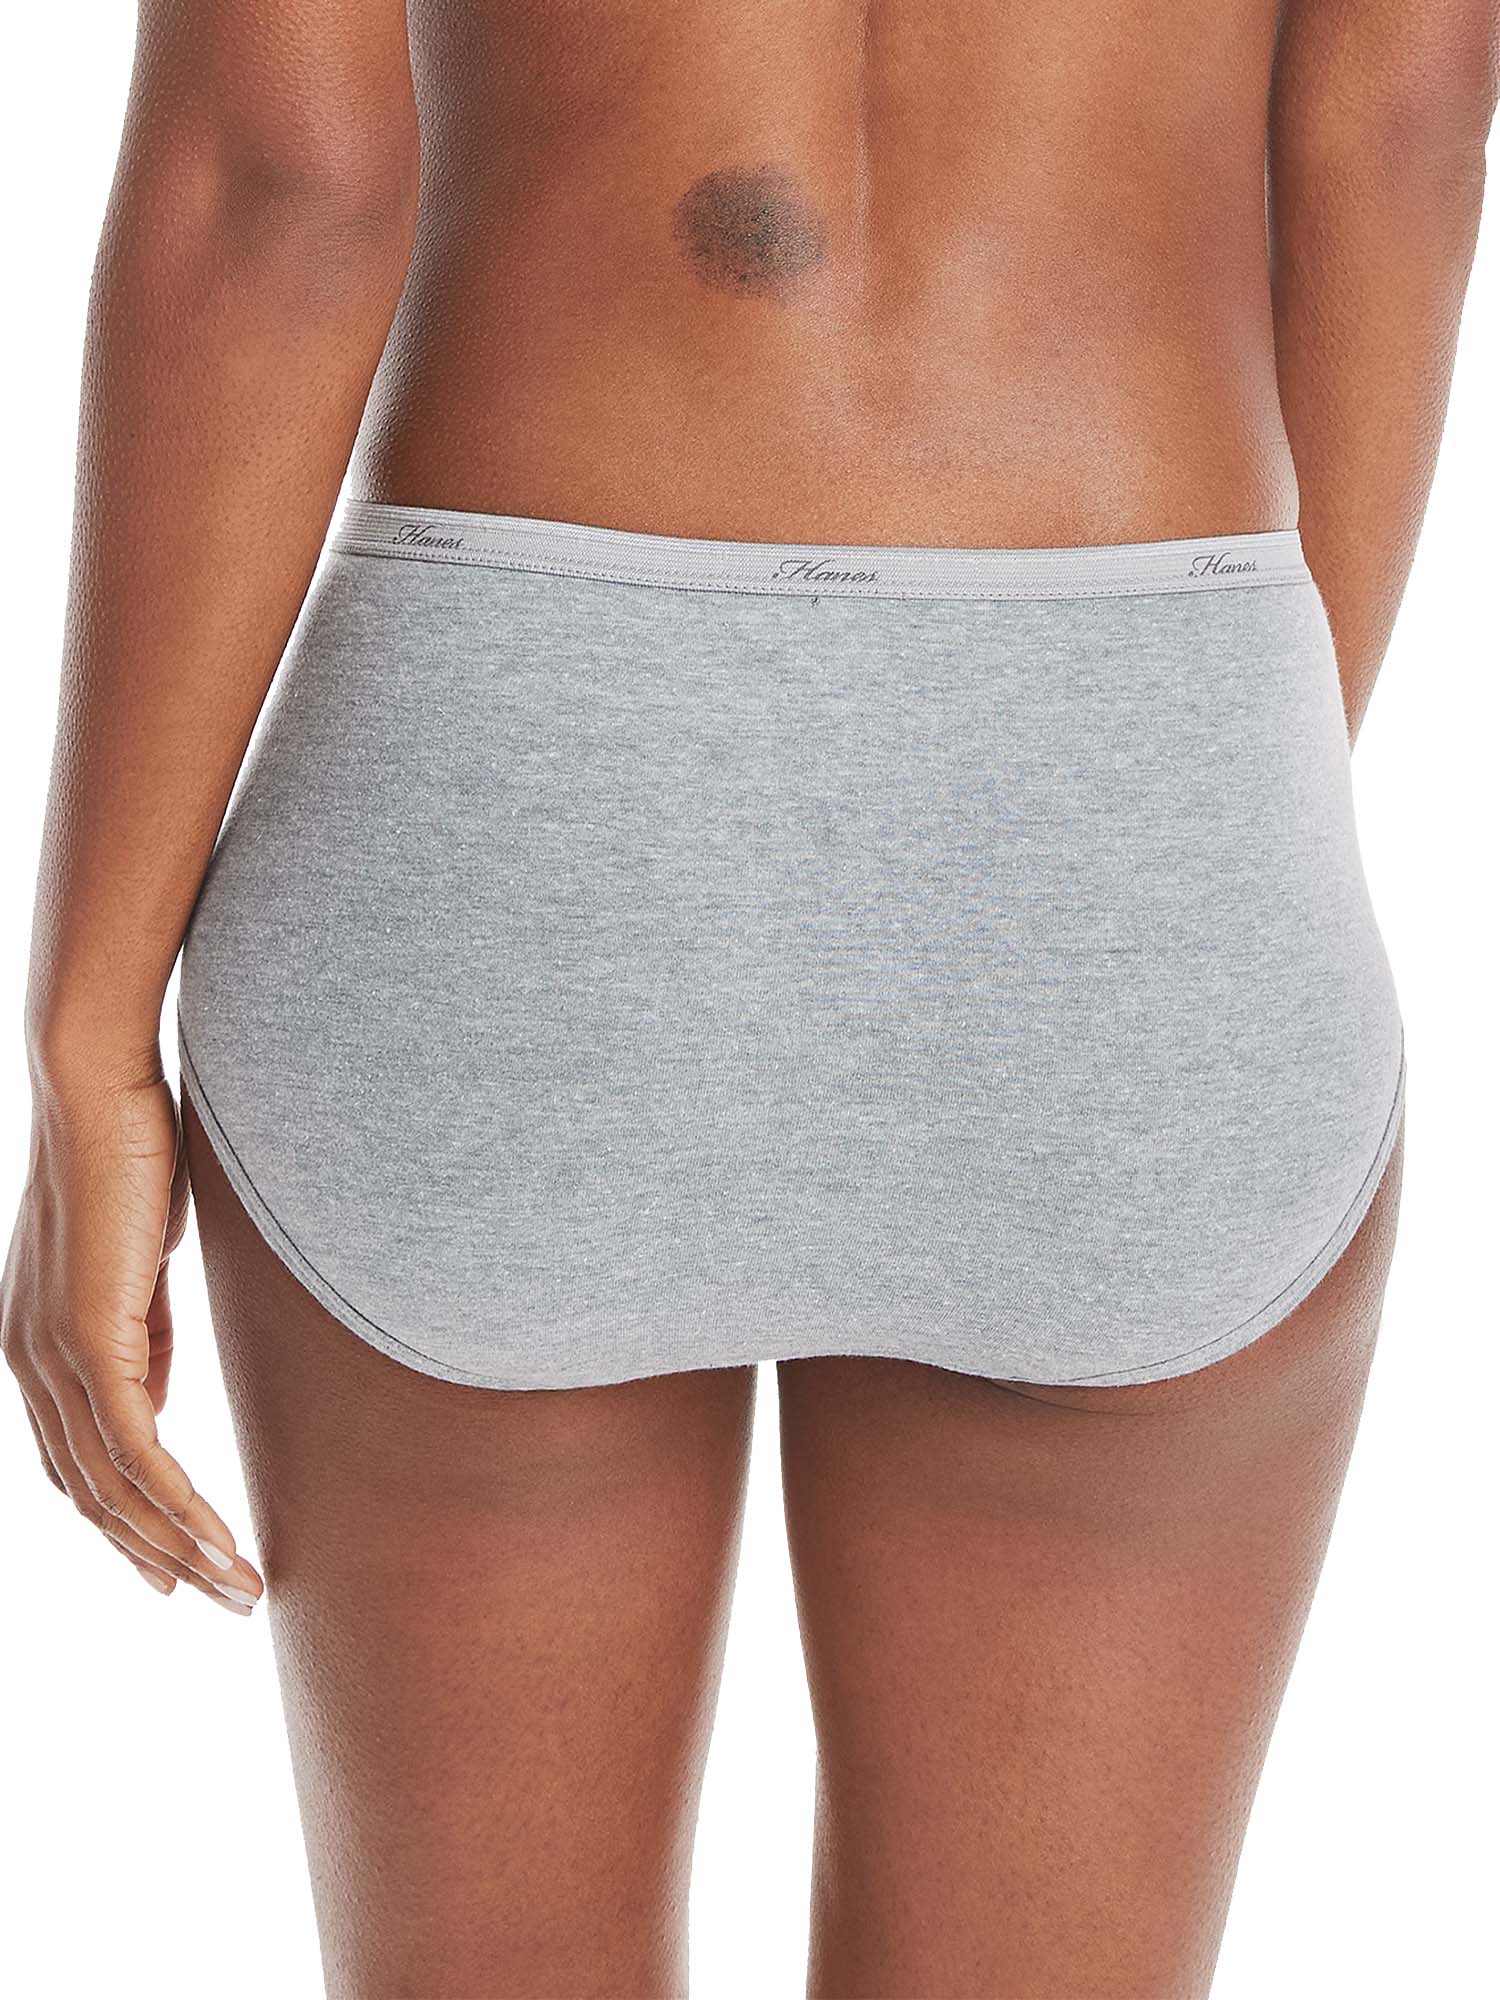 Hanes Women's Cool Comfort Cotton Brief Underwear, 6-Pack - image 4 of 8